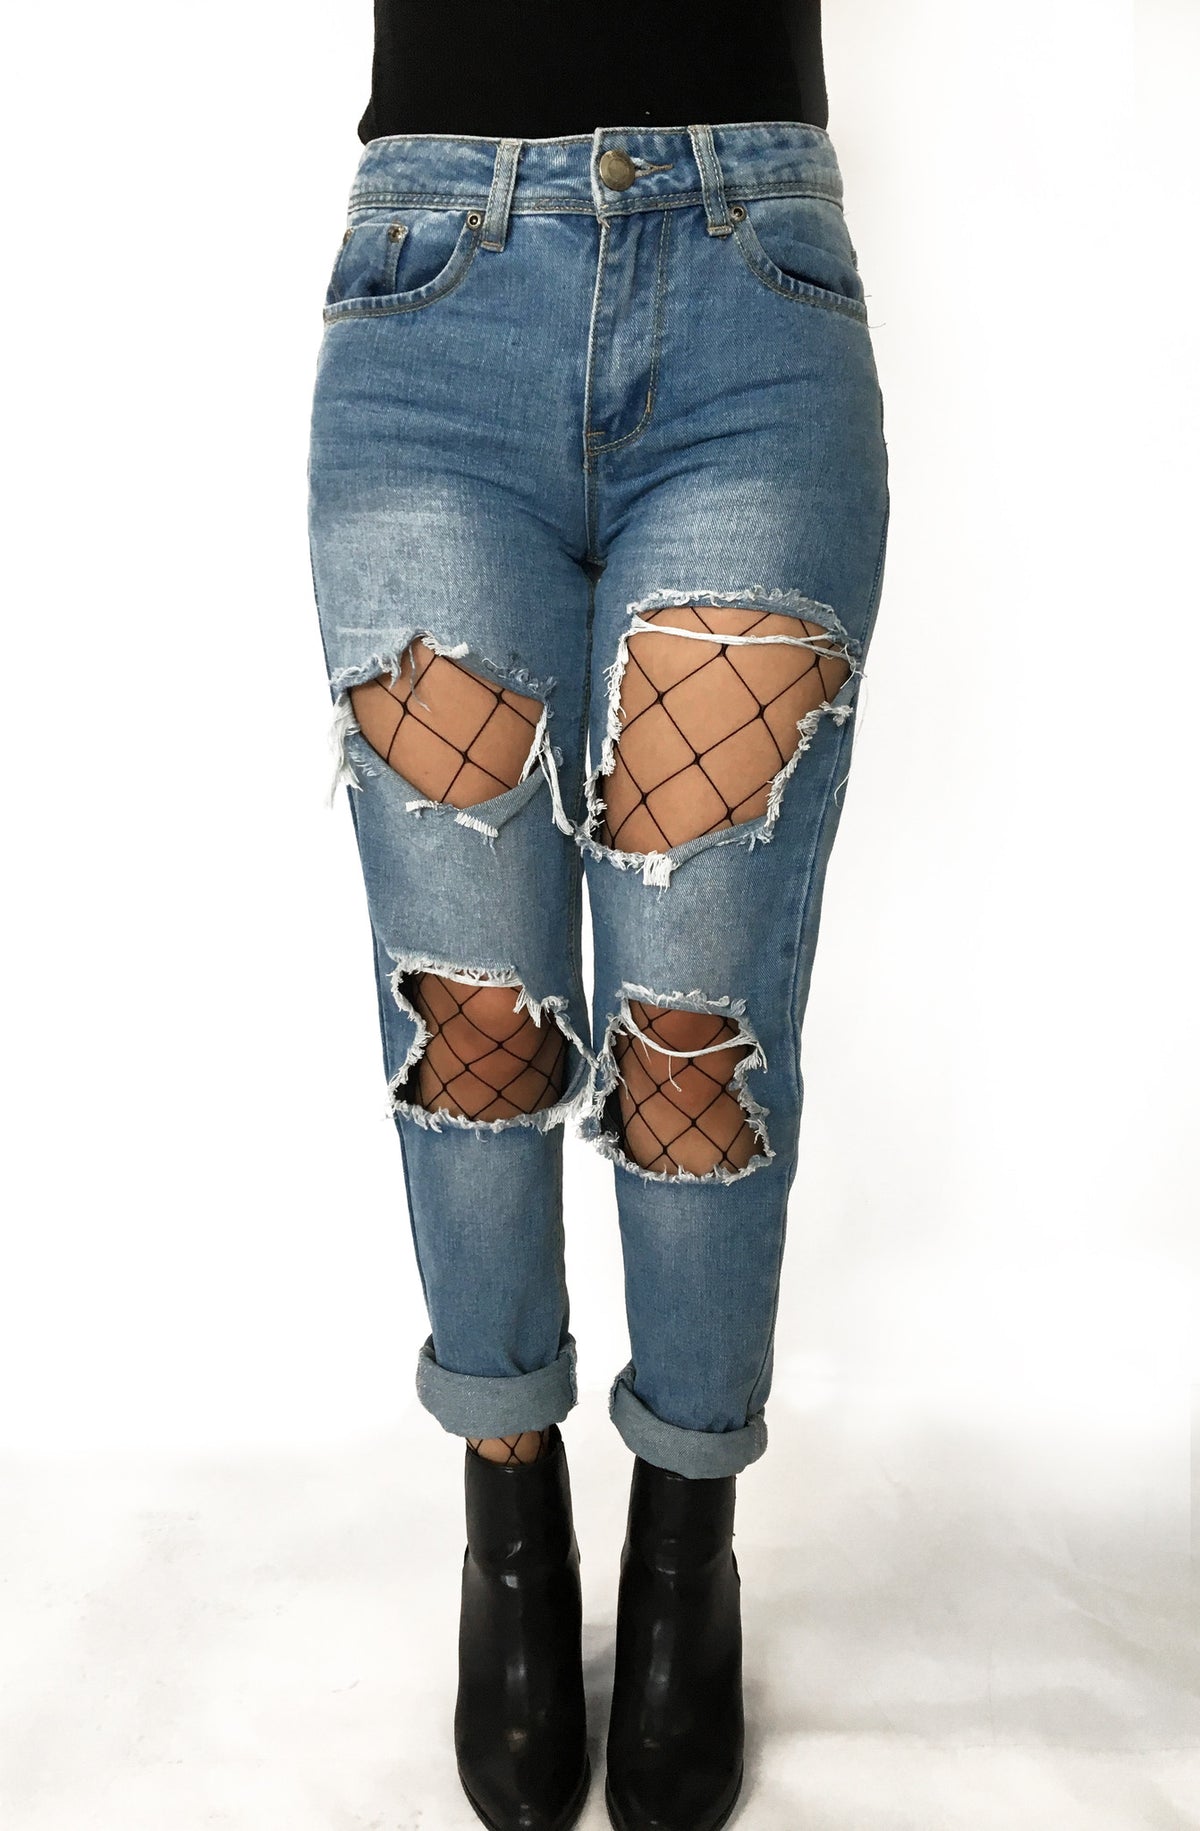 fishnet tights under jeans